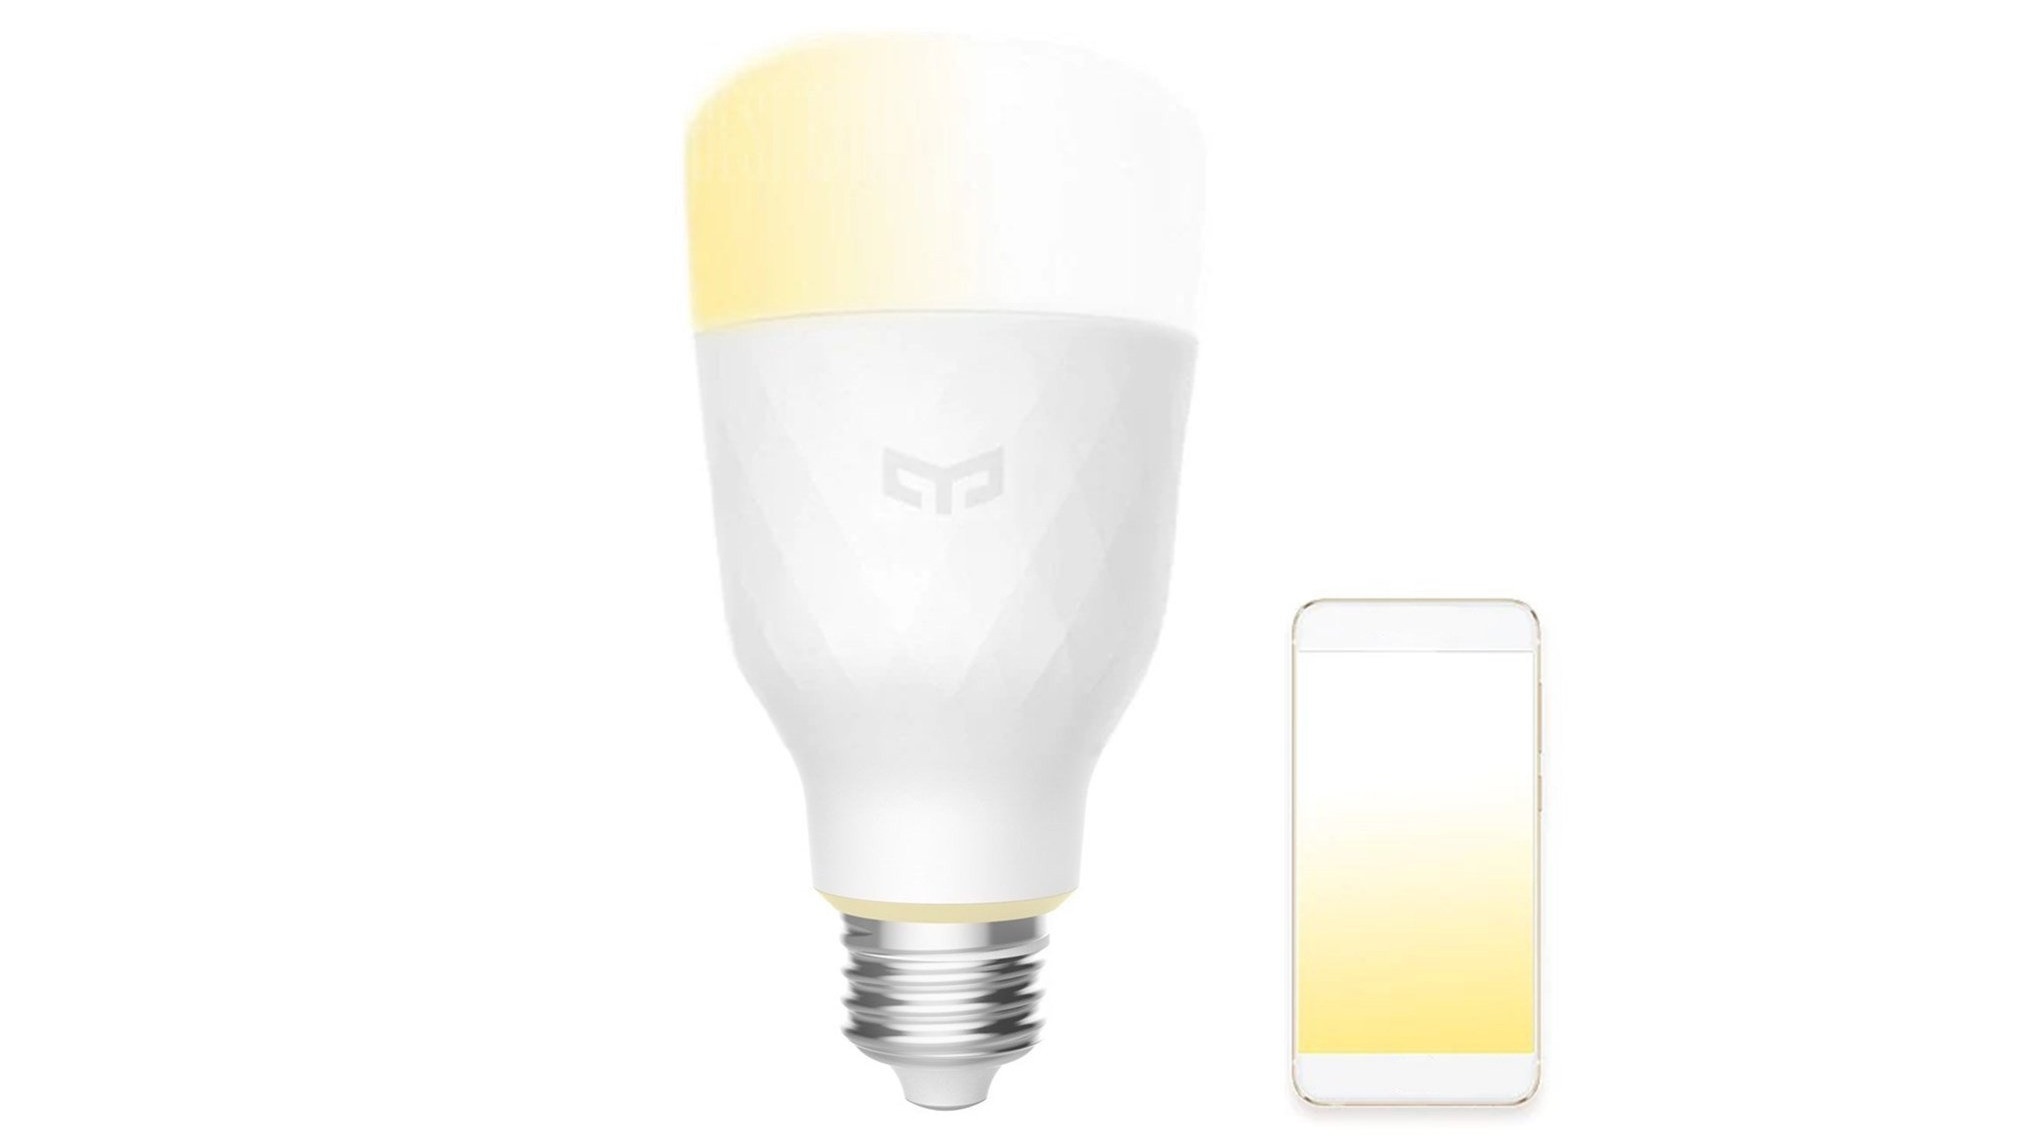 Yeelight Smart LED Bulb W3 YLDP007 лампочка